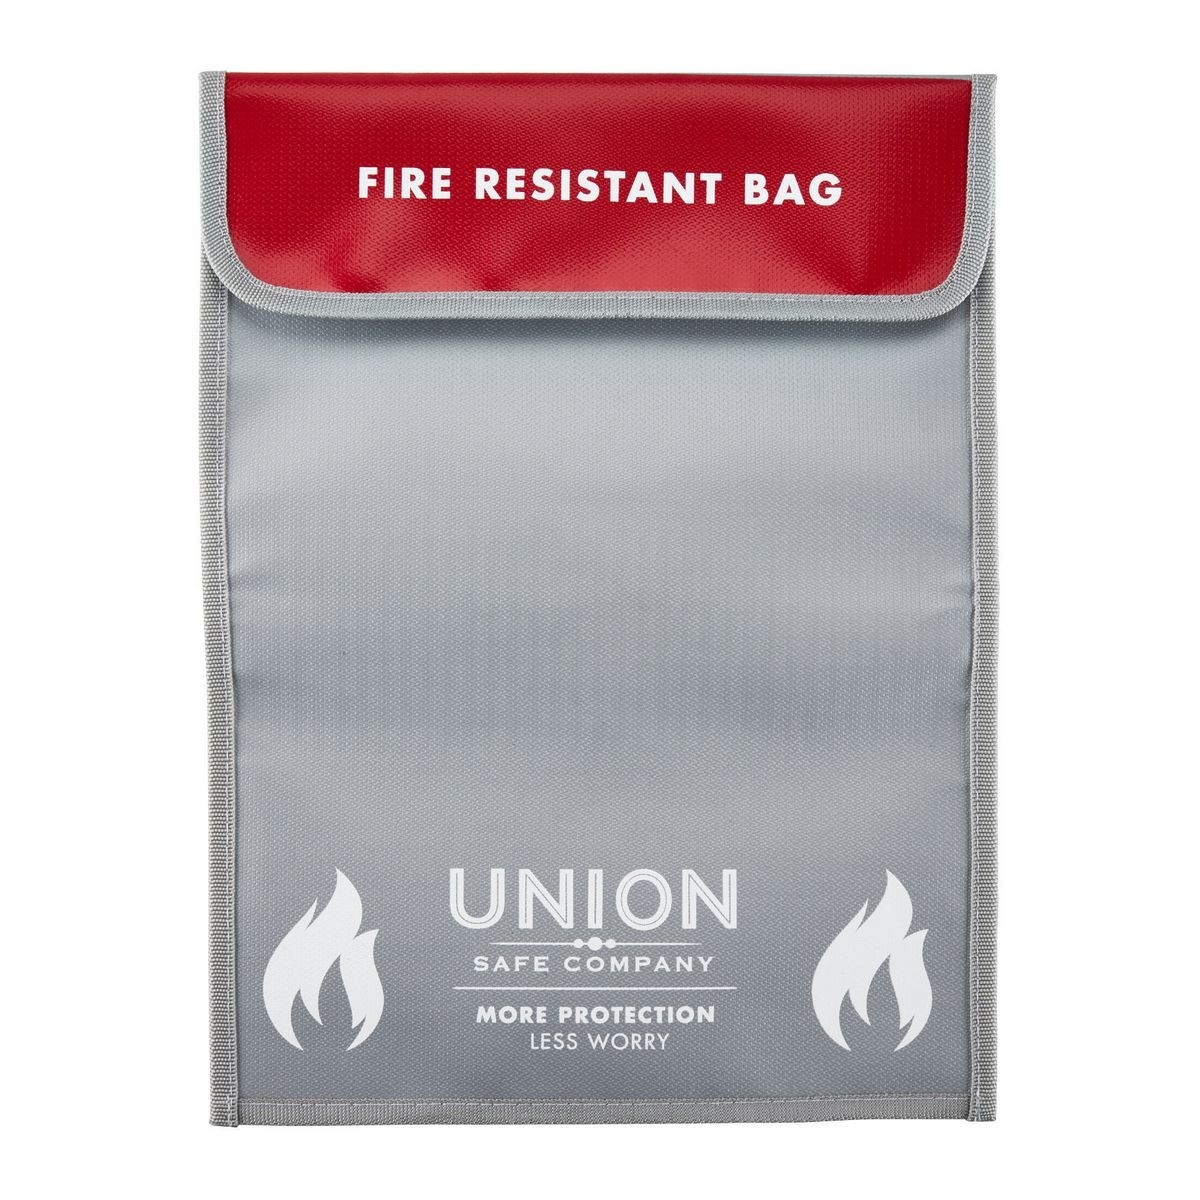 UNION SAFE COMPANY Fire Resistant Bag – Item 56991